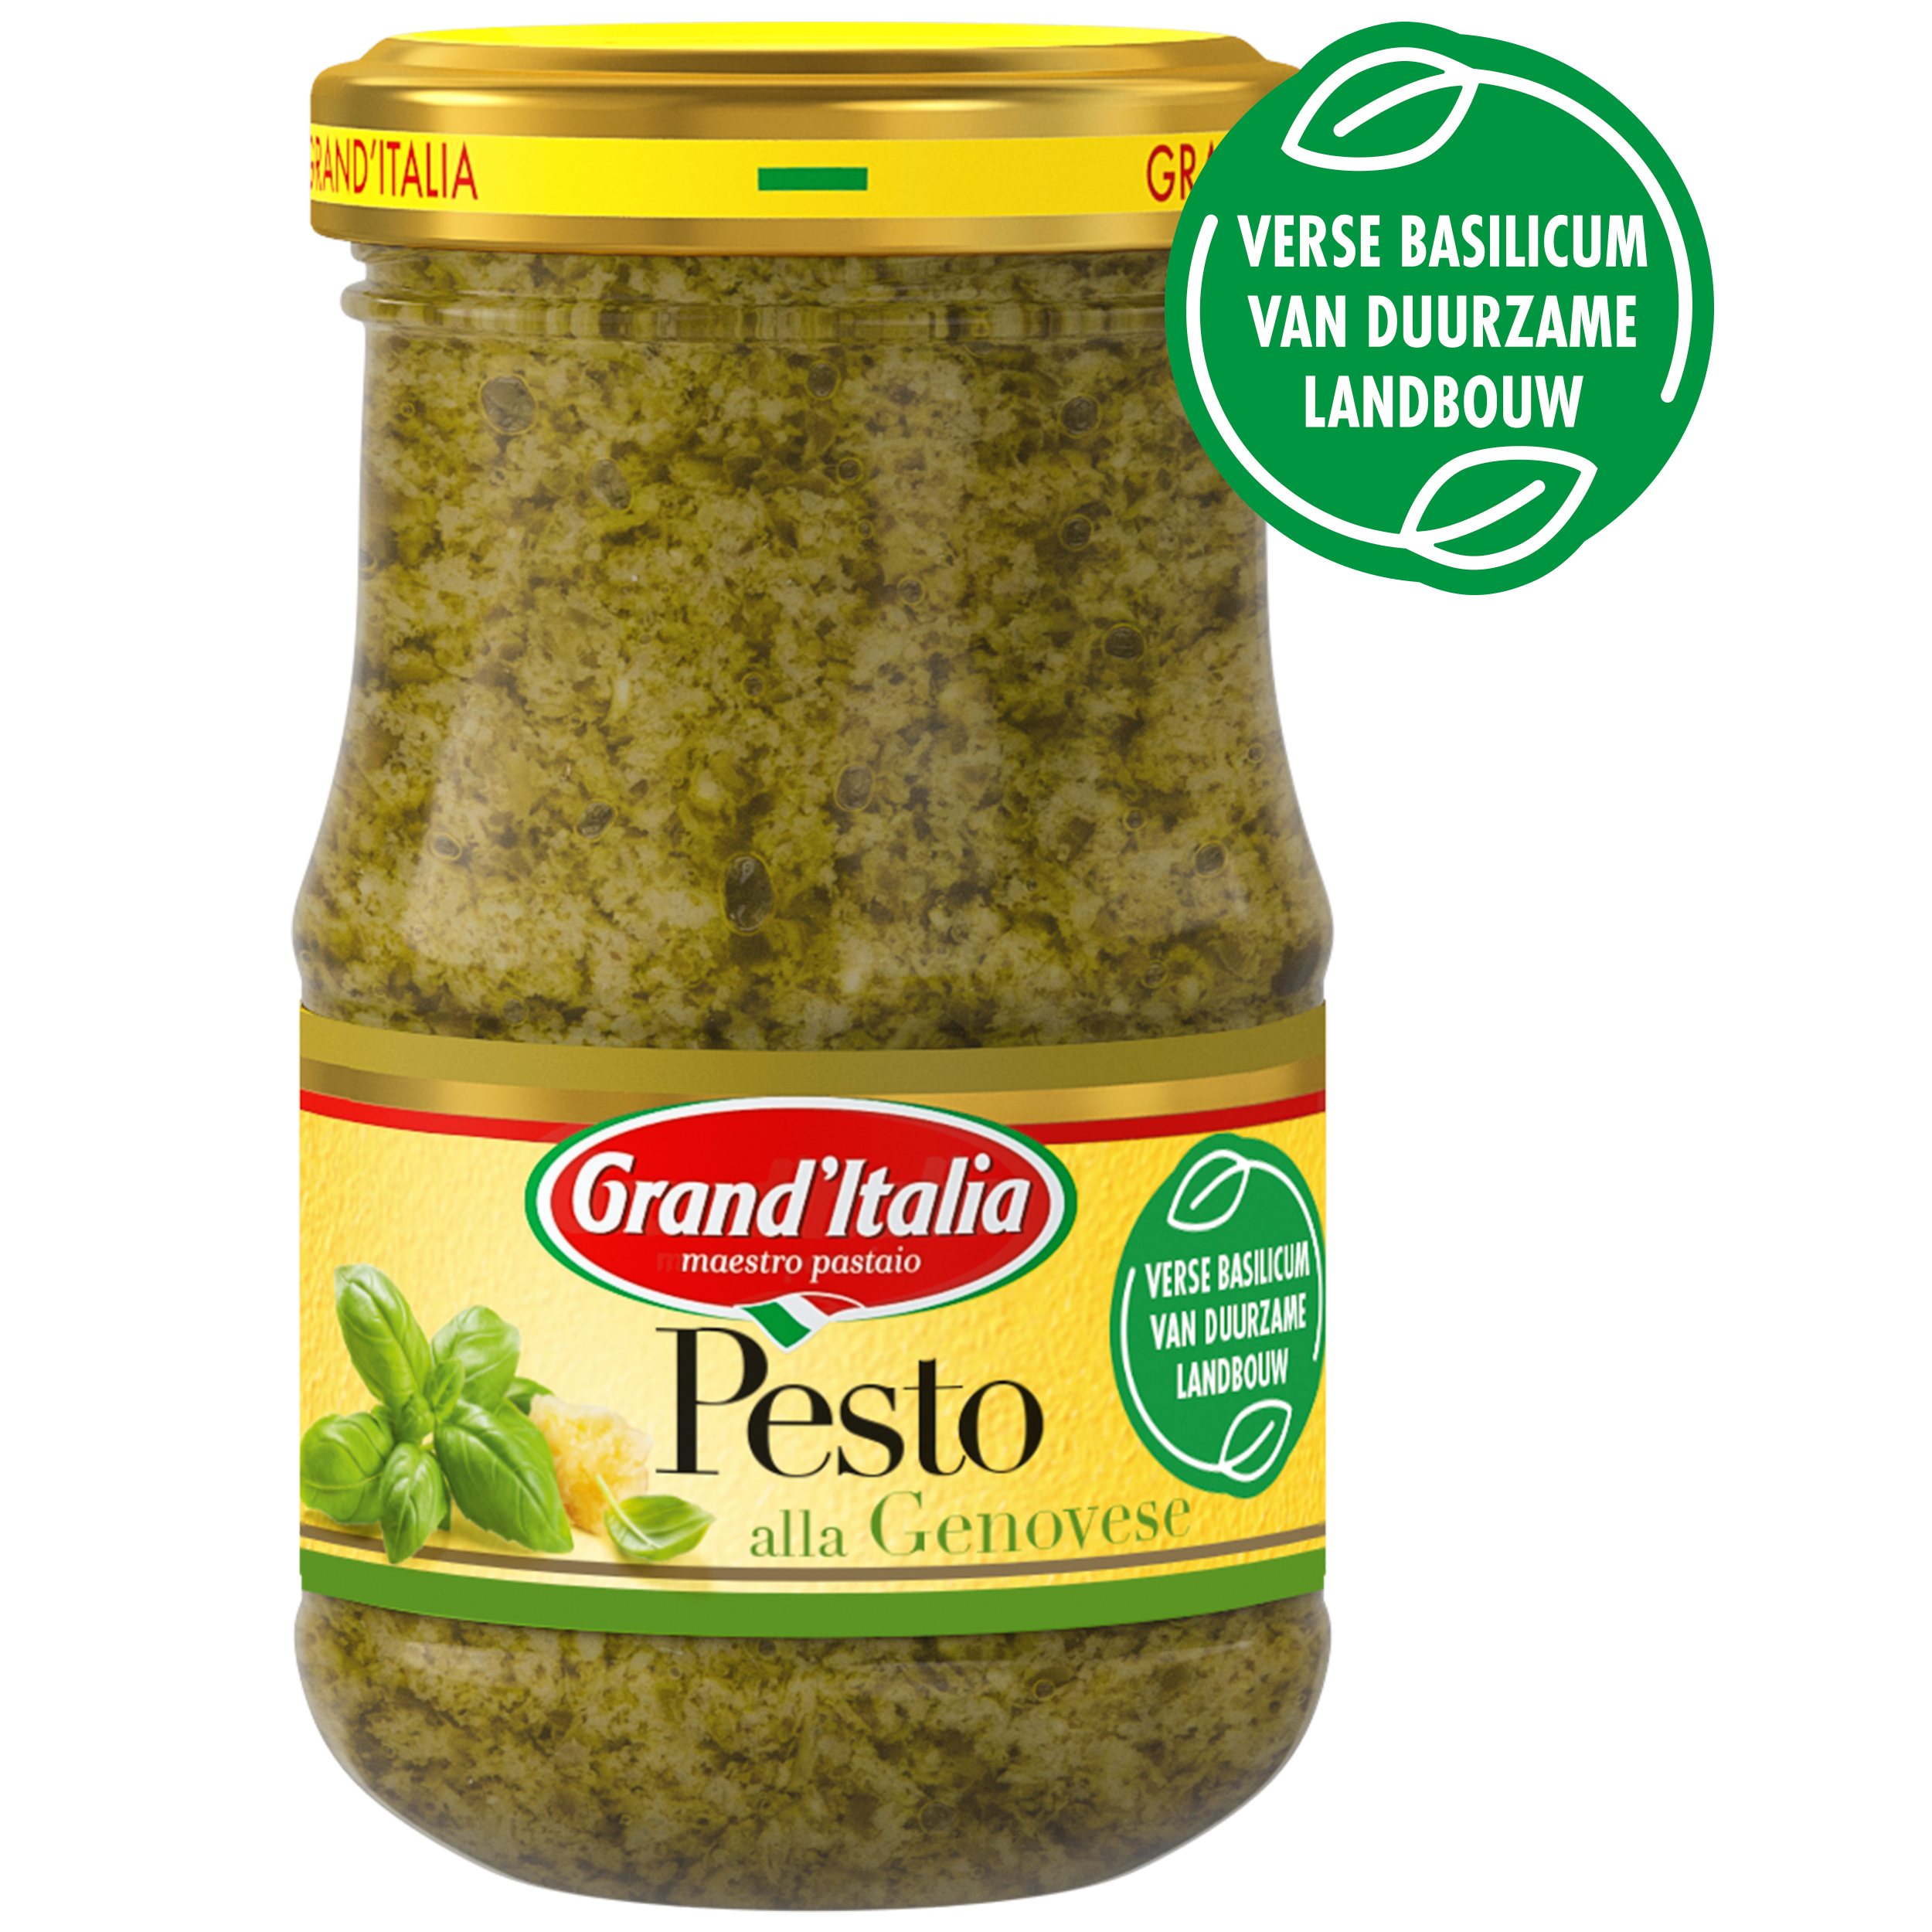 Pesto alla Genovese 90g Grand'Italia - claim